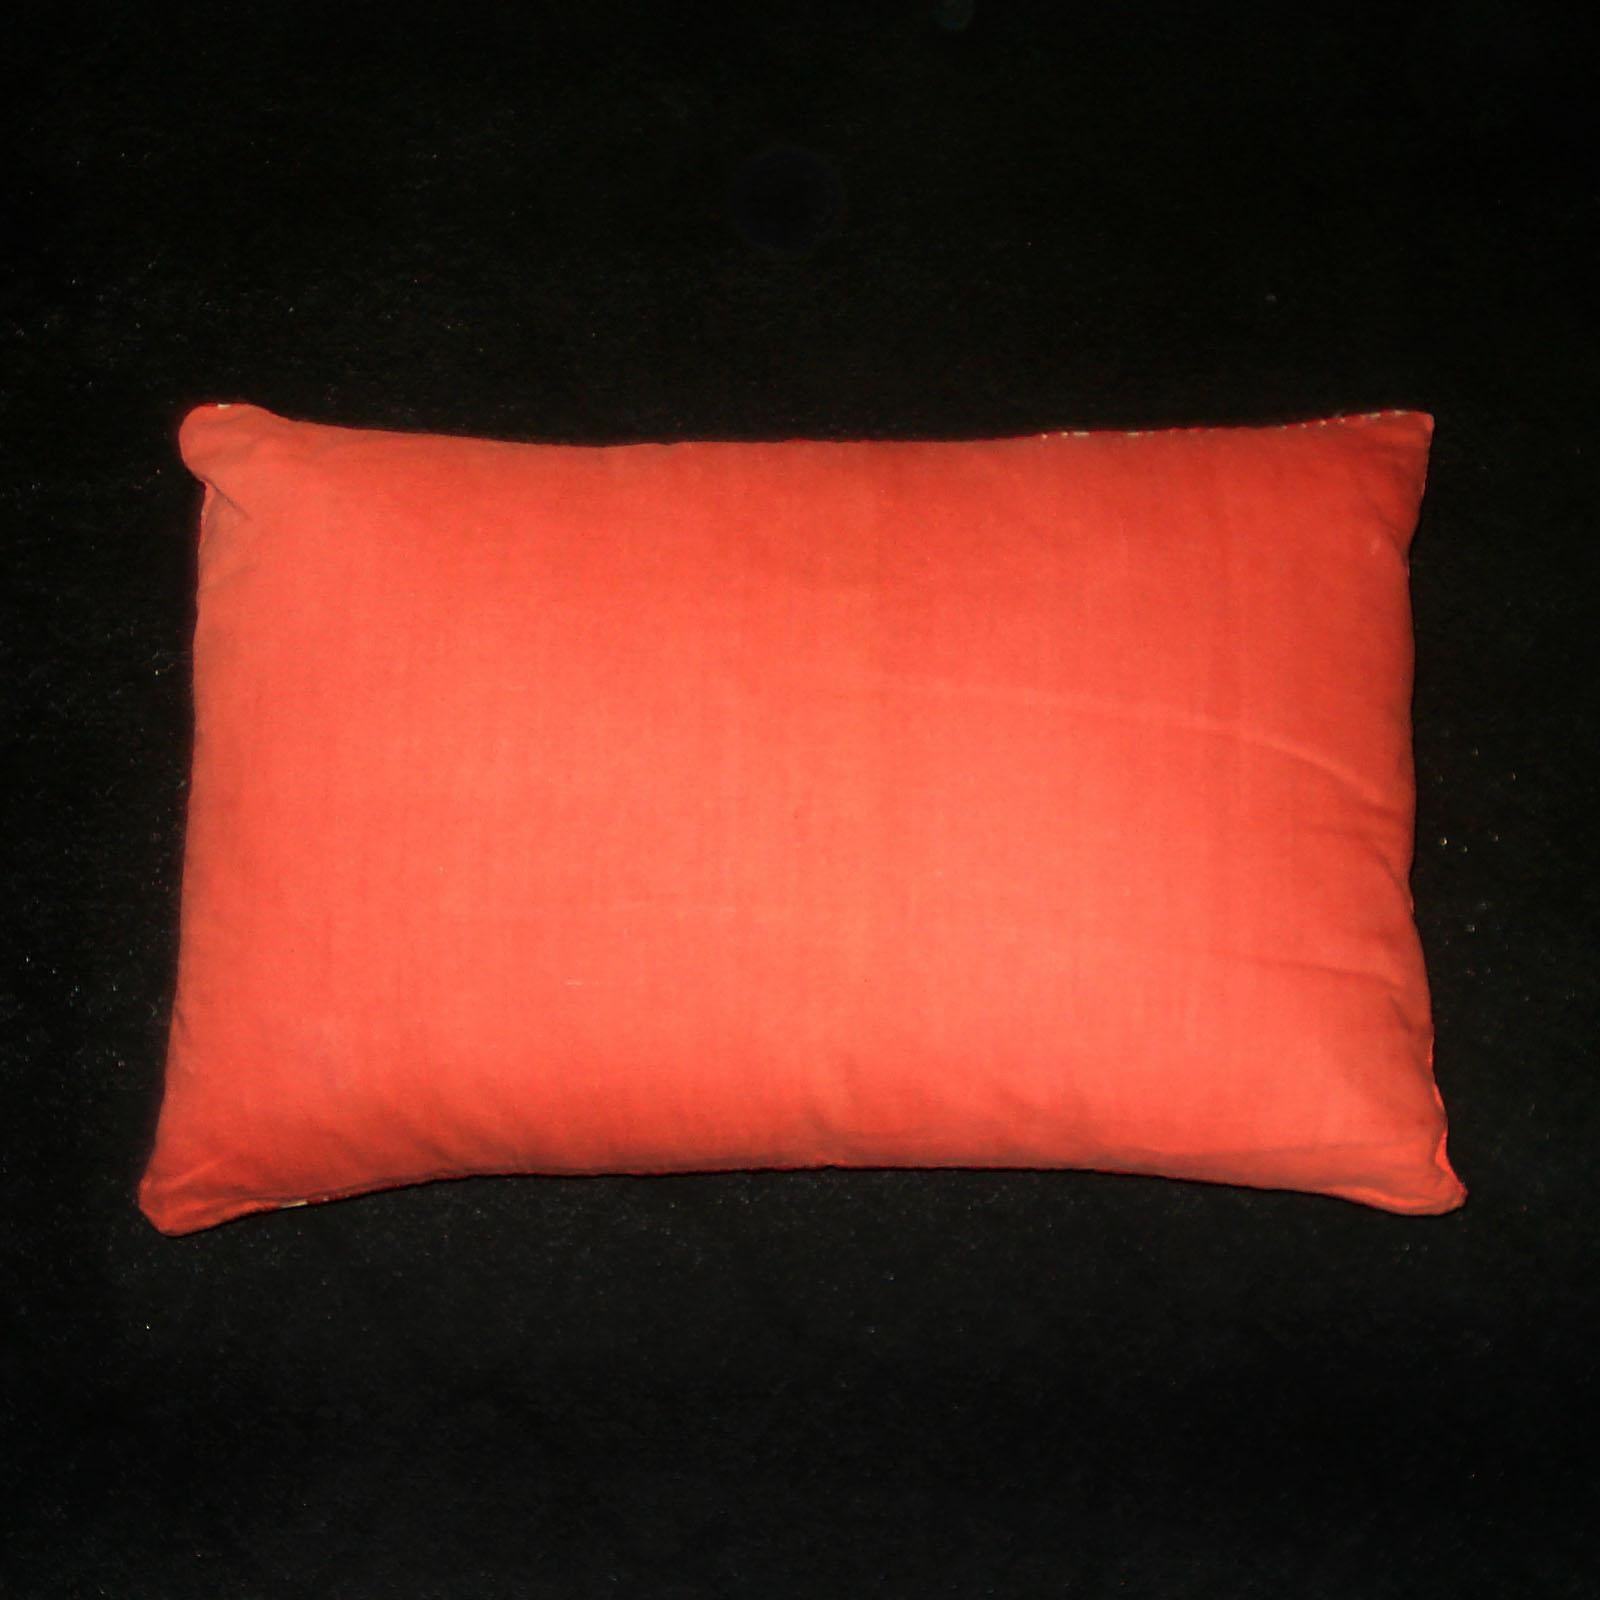 Rollakan Pillow, Hand-Woven Pillow, Sweden 19th Century For Sale 2